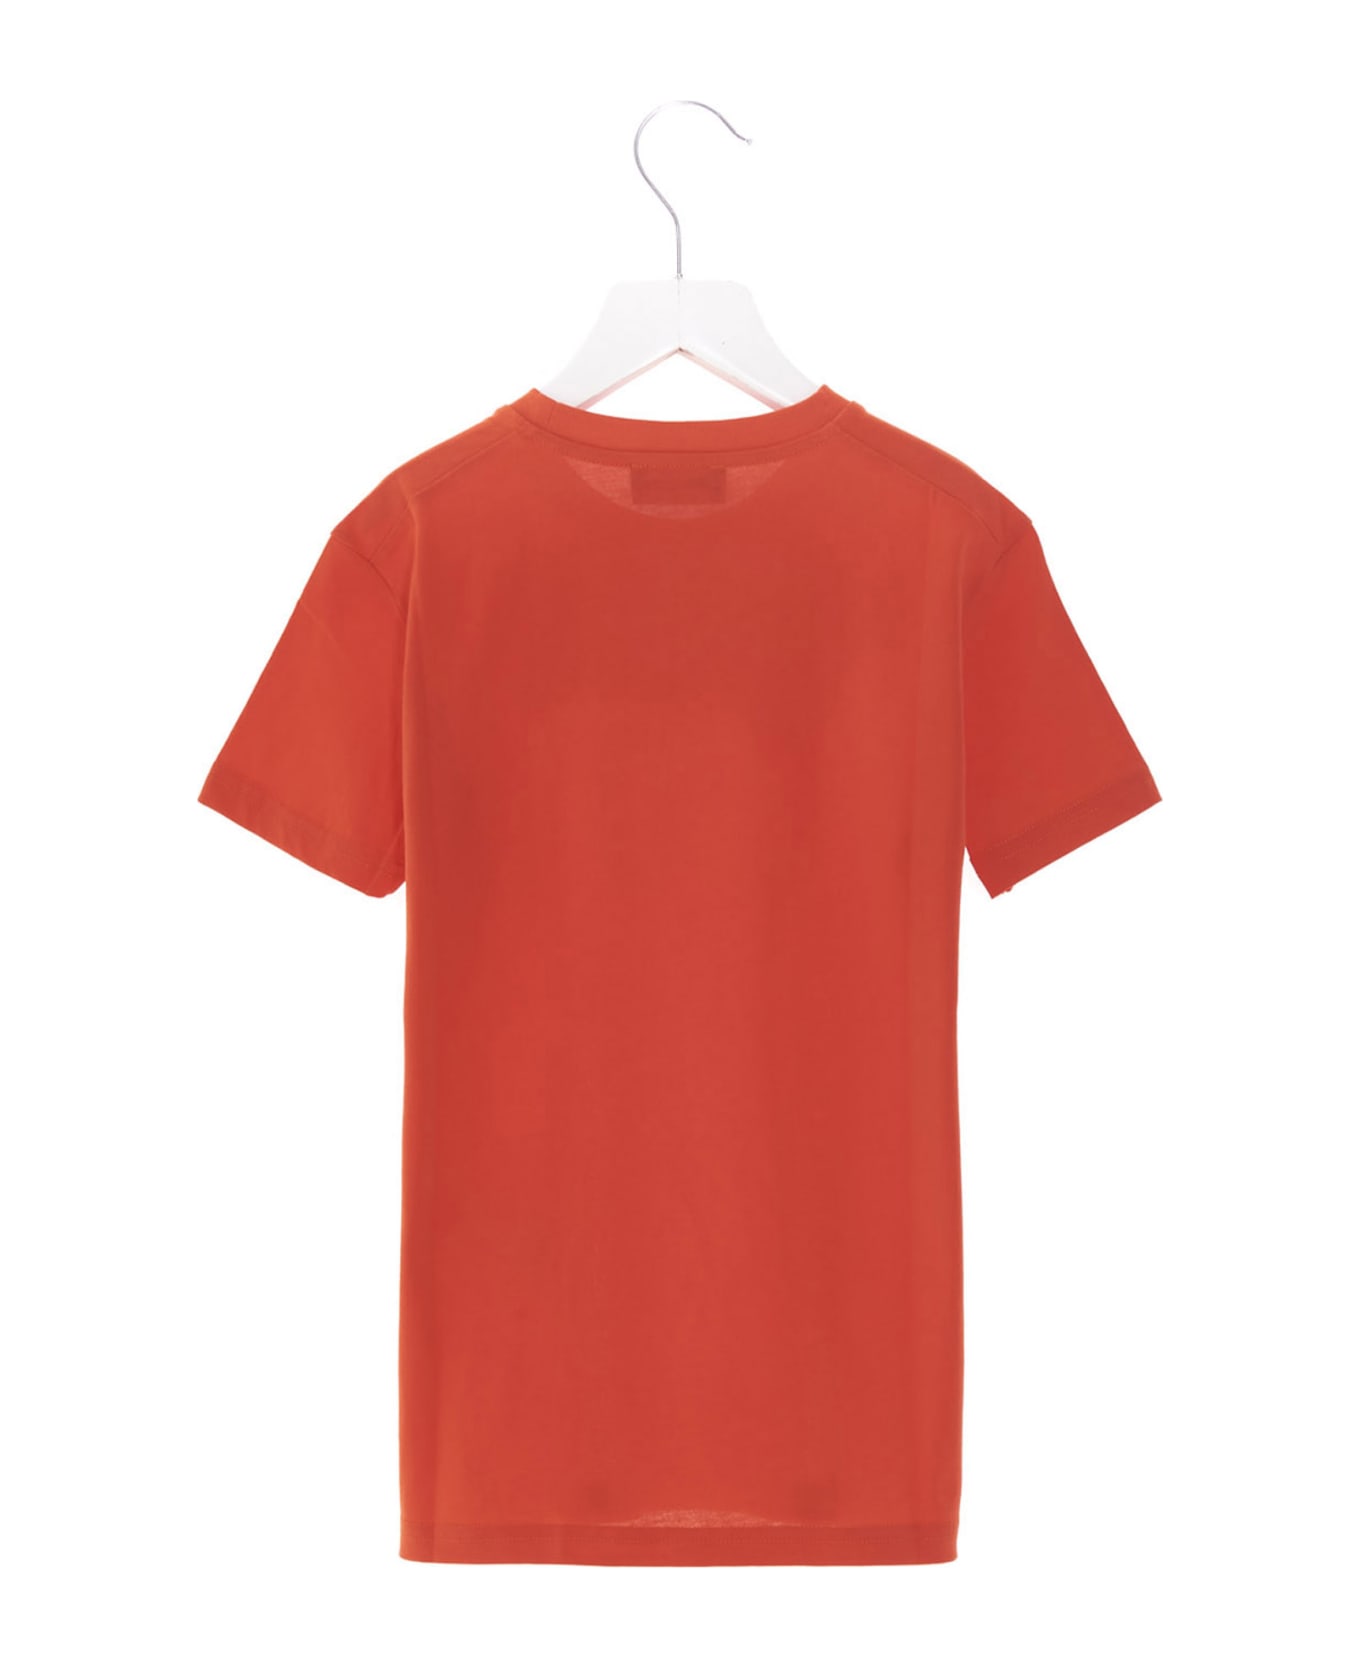 Dsquared2 'icon  T-shirt - Orange